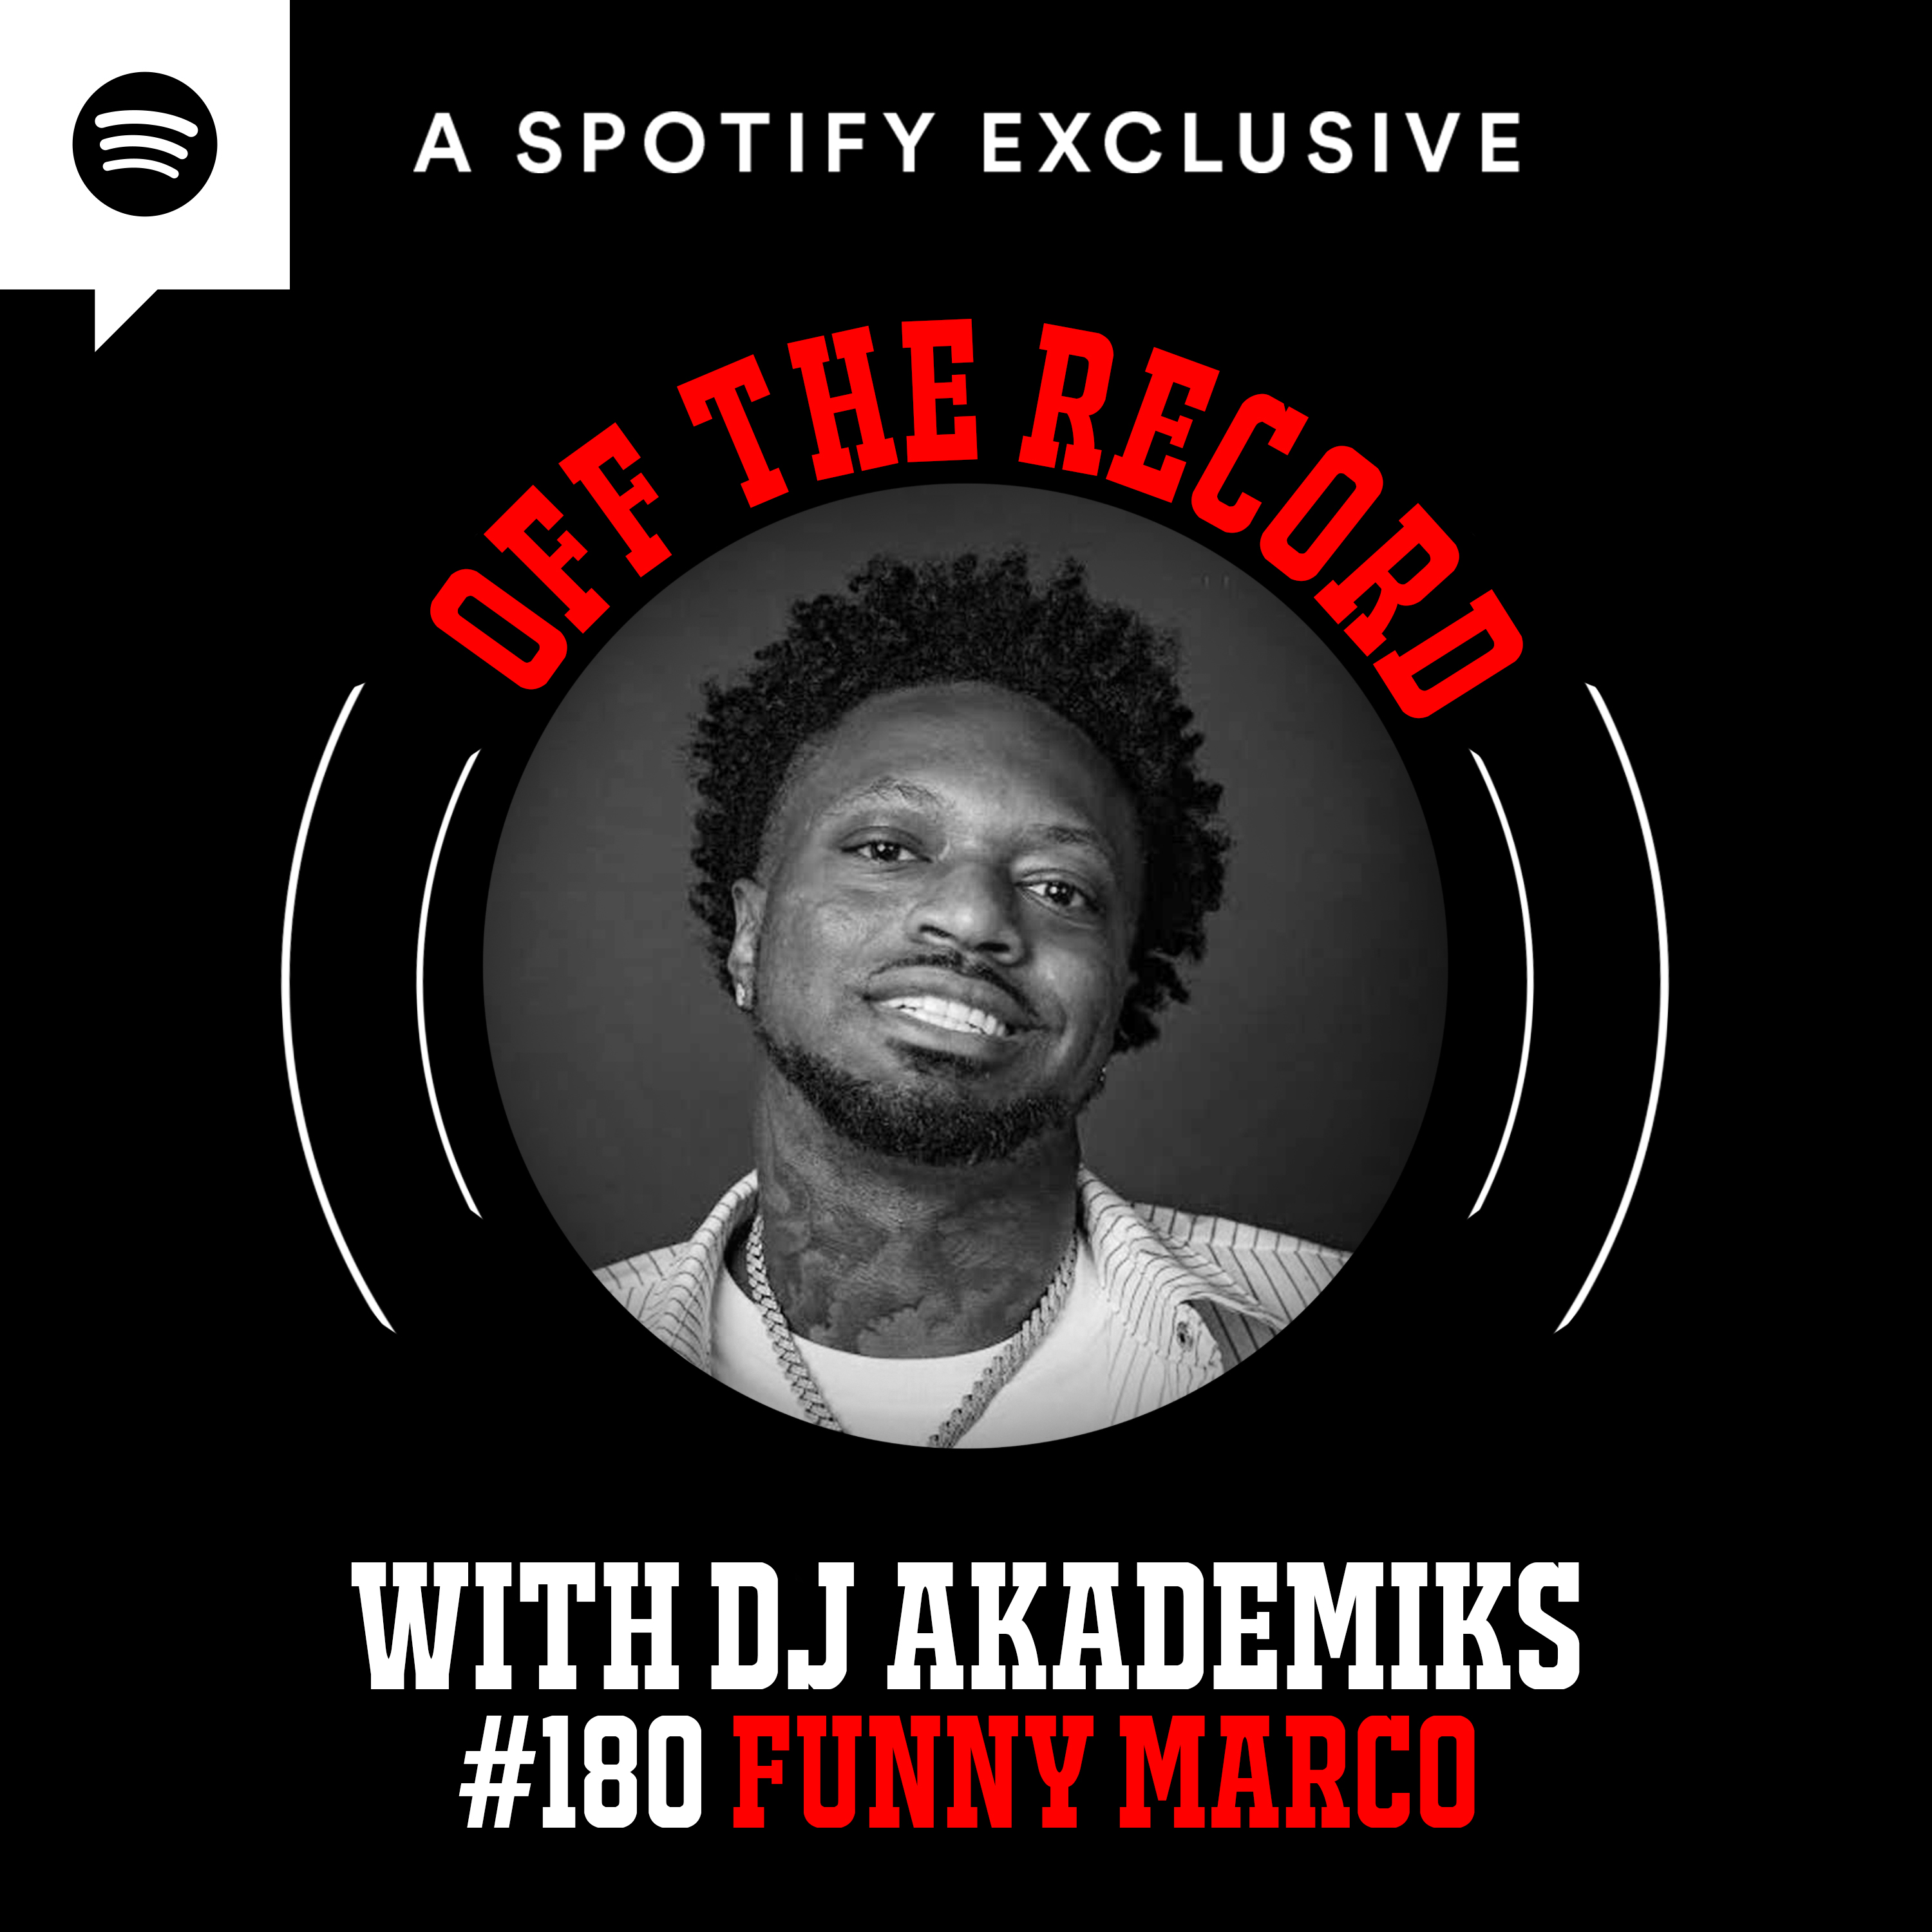 DJ Akademiks on Twitter: "Off the Record: Funny Marco Episode Full Episode  Link: https://t.co/ZMw5A05Bsd https://t.co/WKnAgukg6h" / Twitter